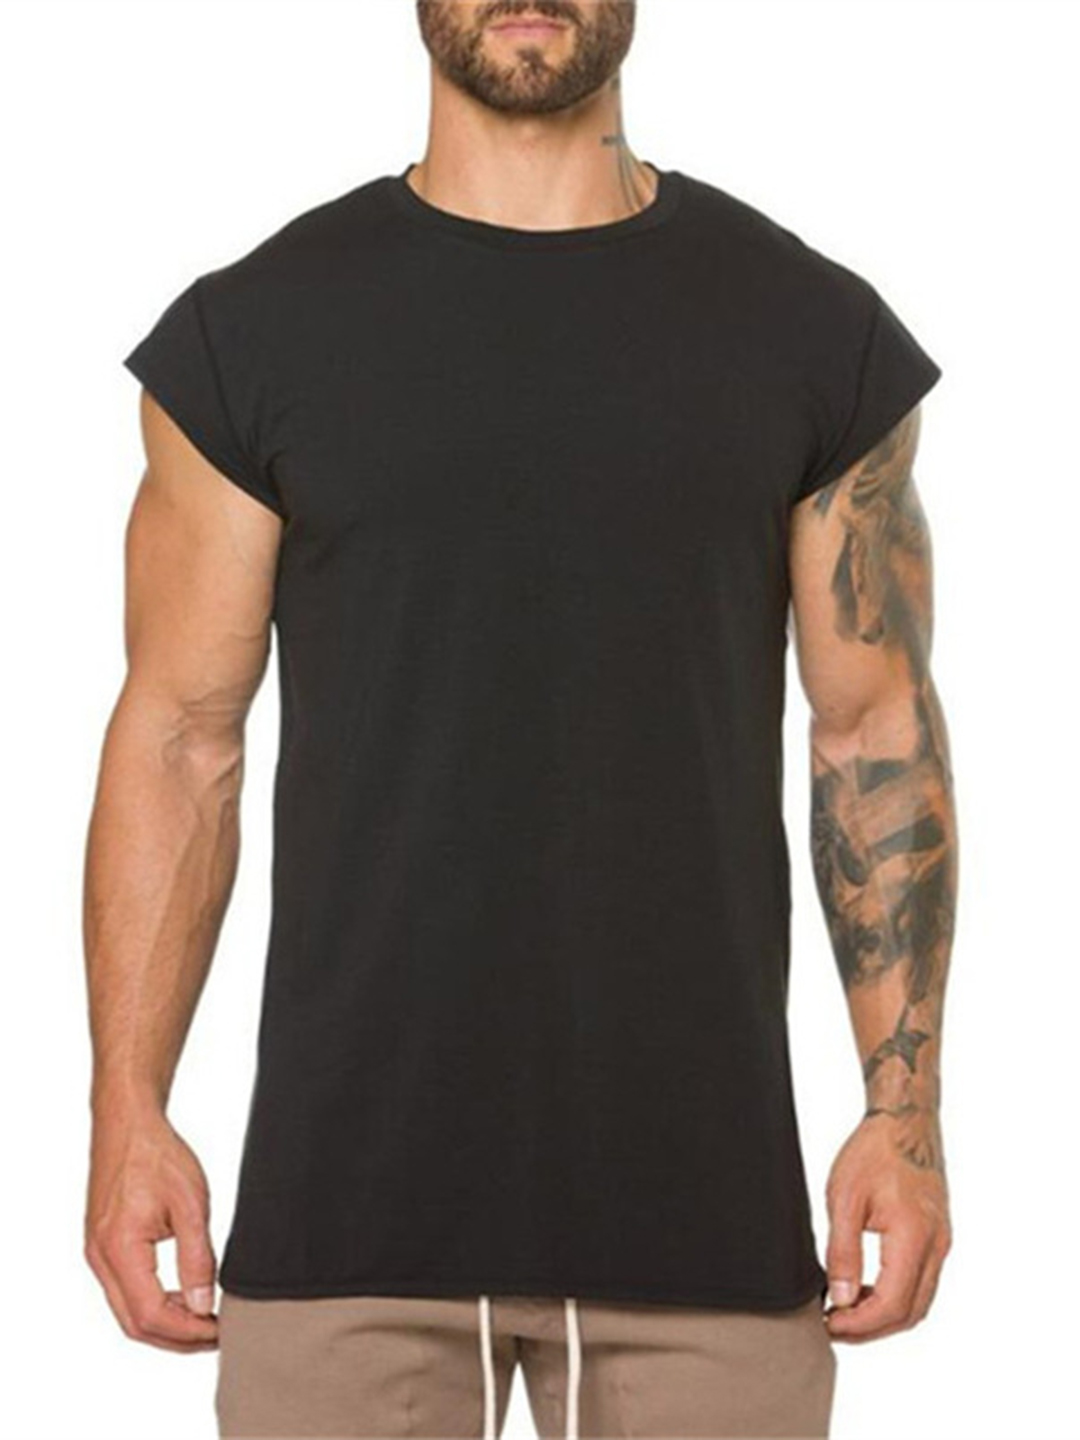 Men's Basic Solid Color Running T-Shirt